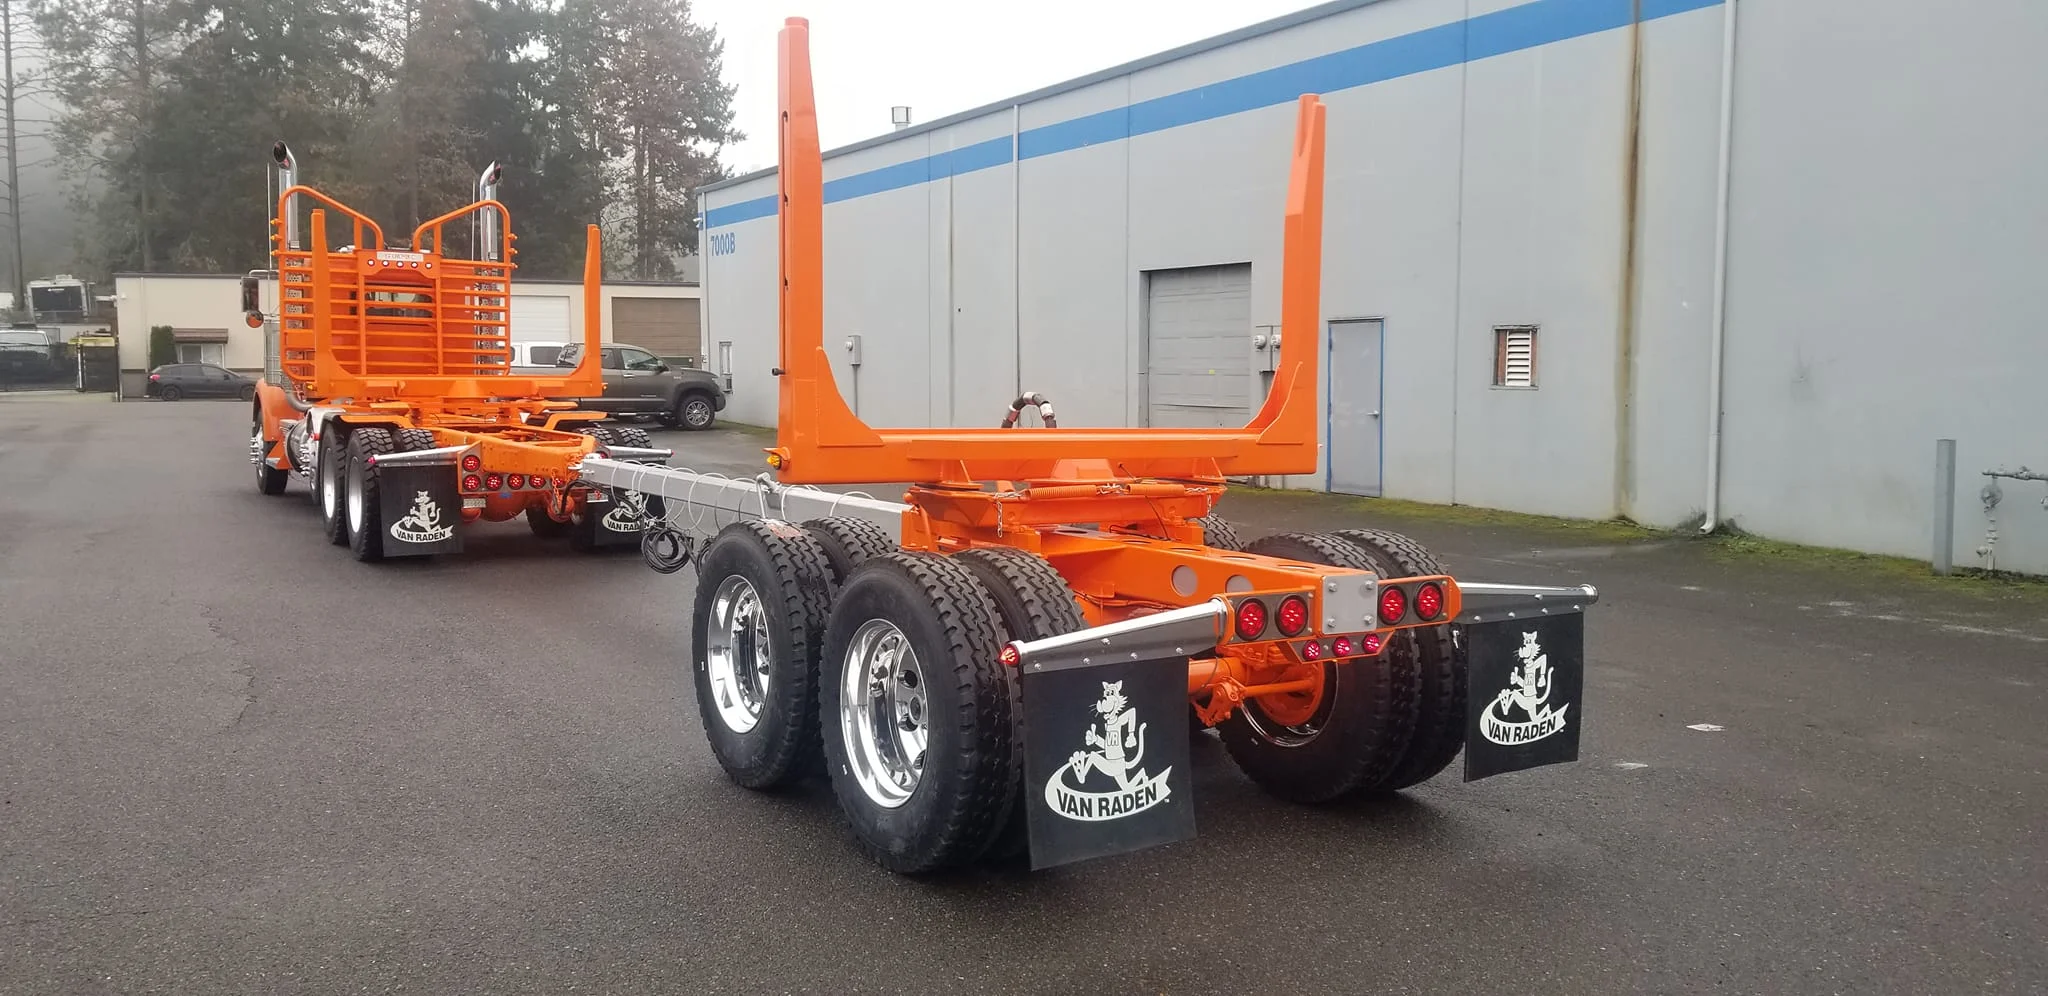 Trailers built for heavy hauling by Van Raden Industries in Vancouver, WA.